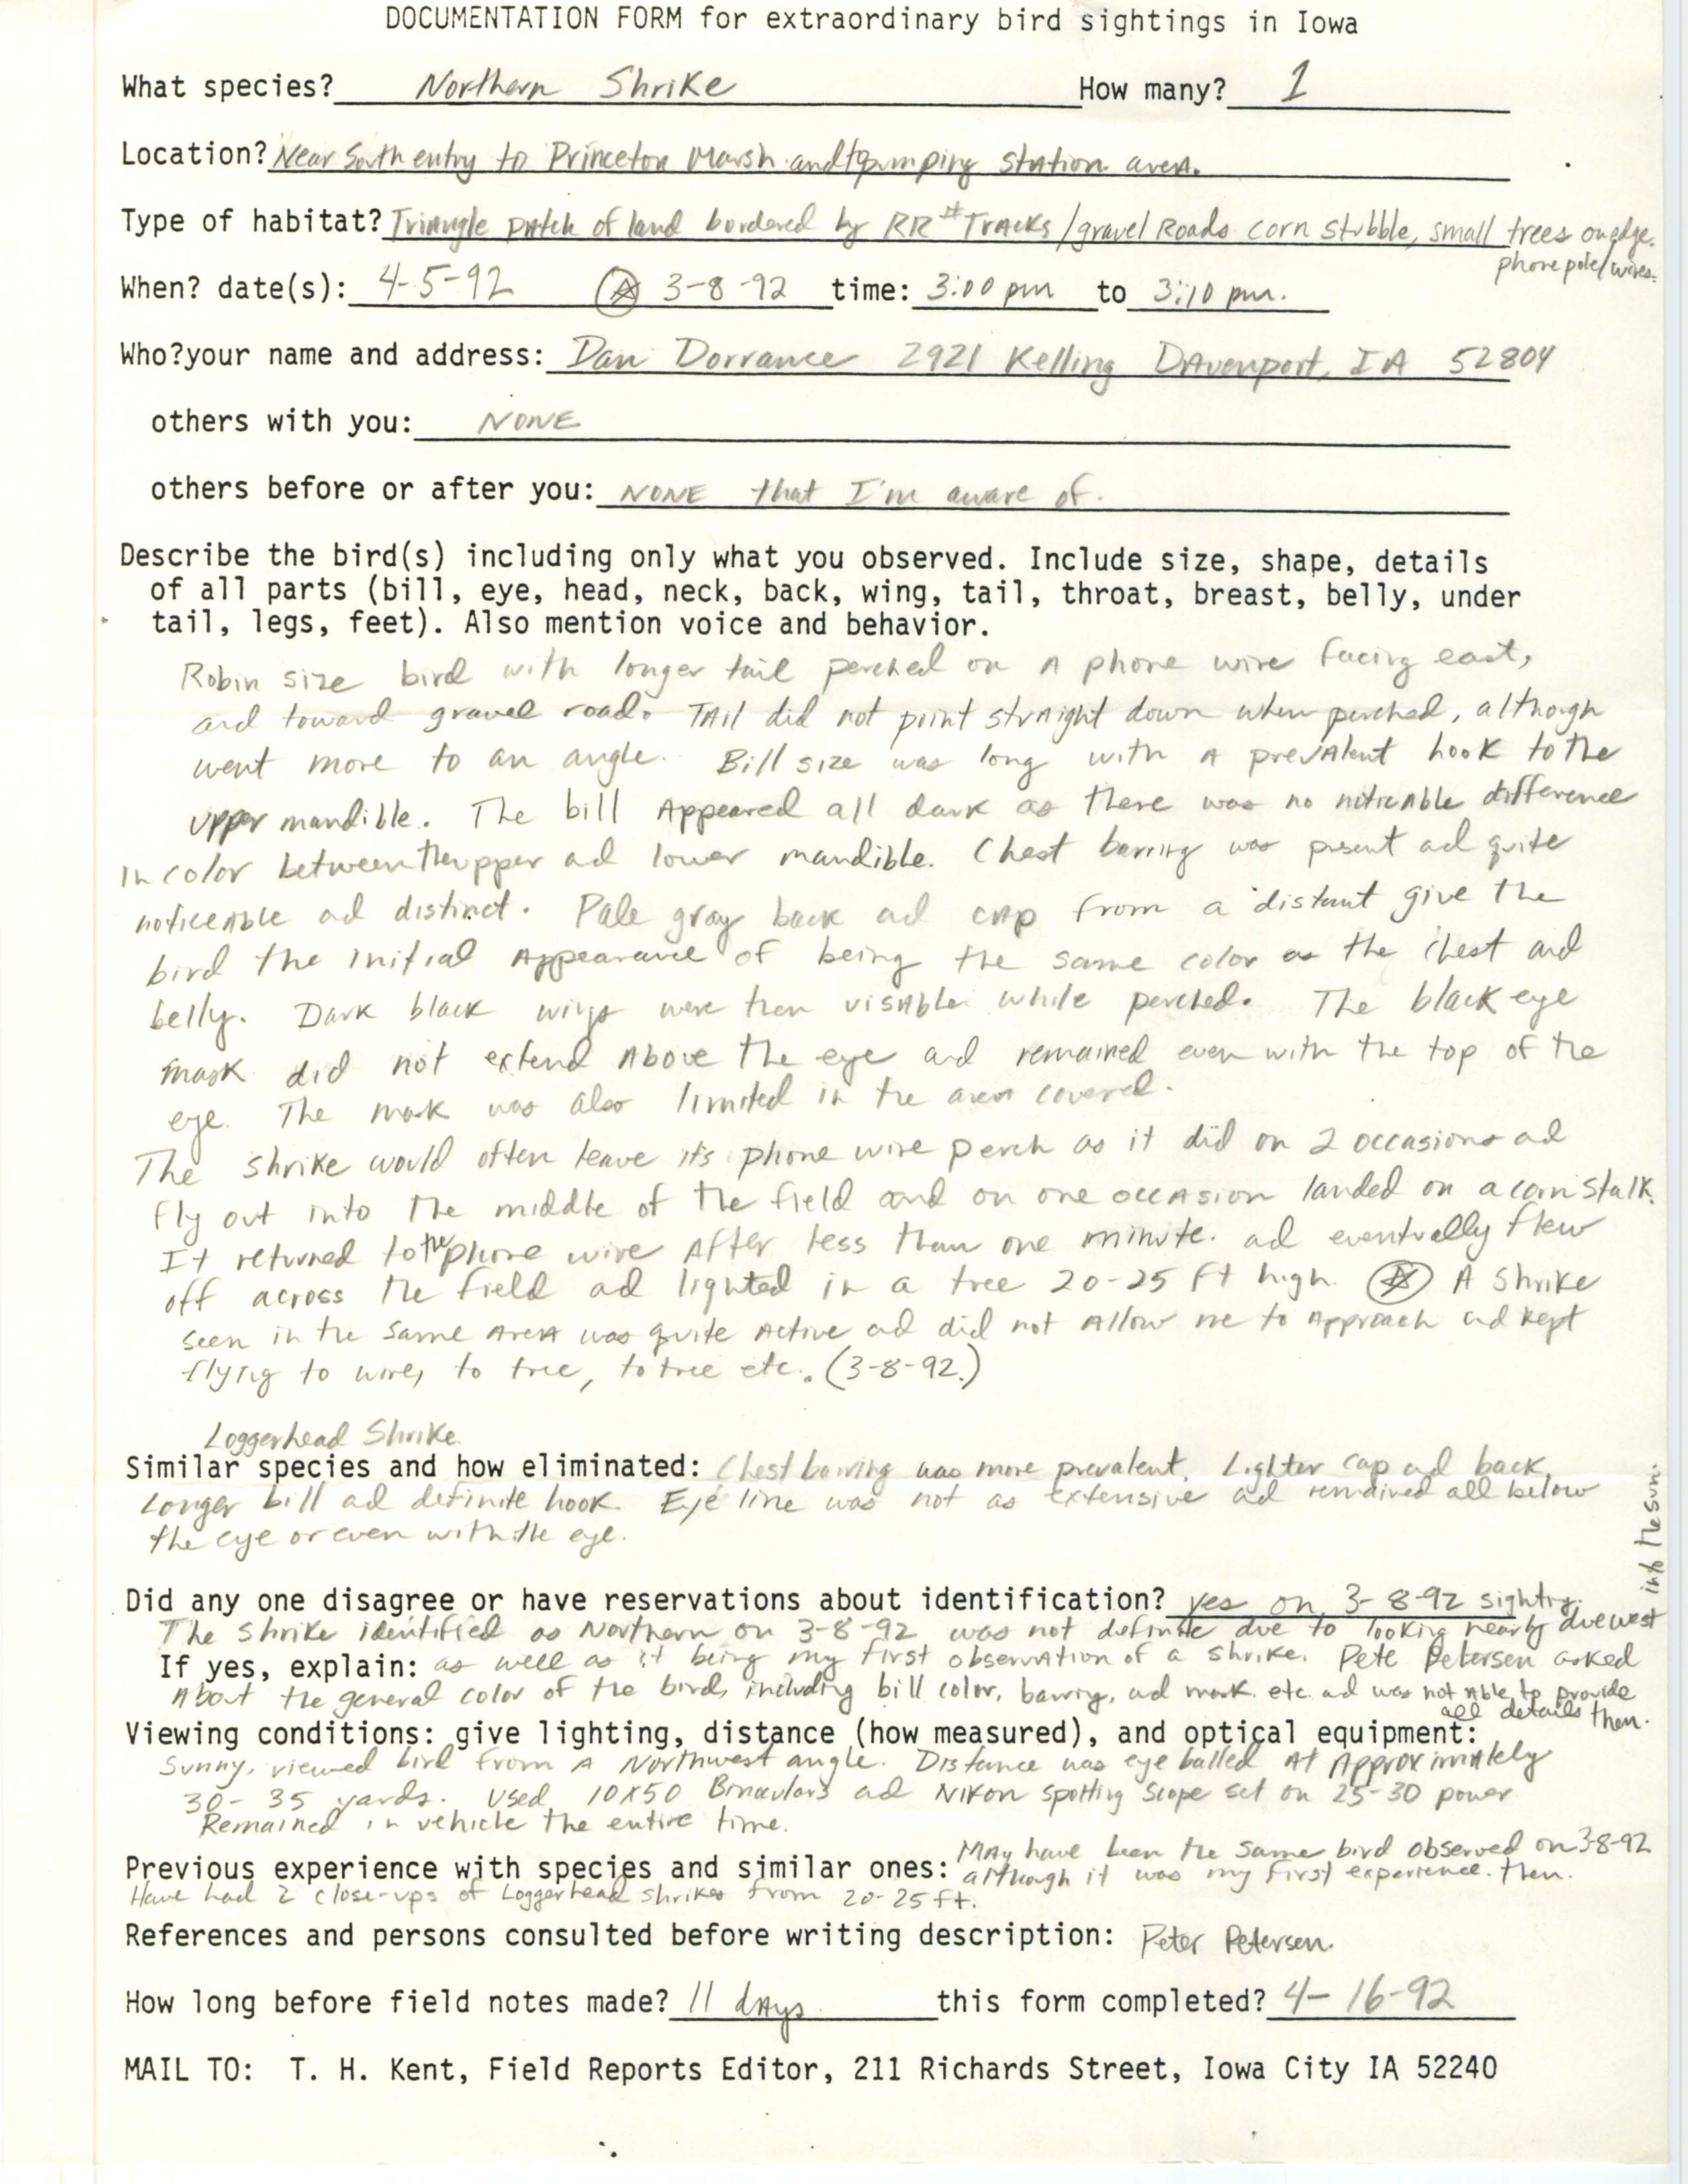 Rare bird documentation form for Northern Shrike at Princeton Marsh in 1992